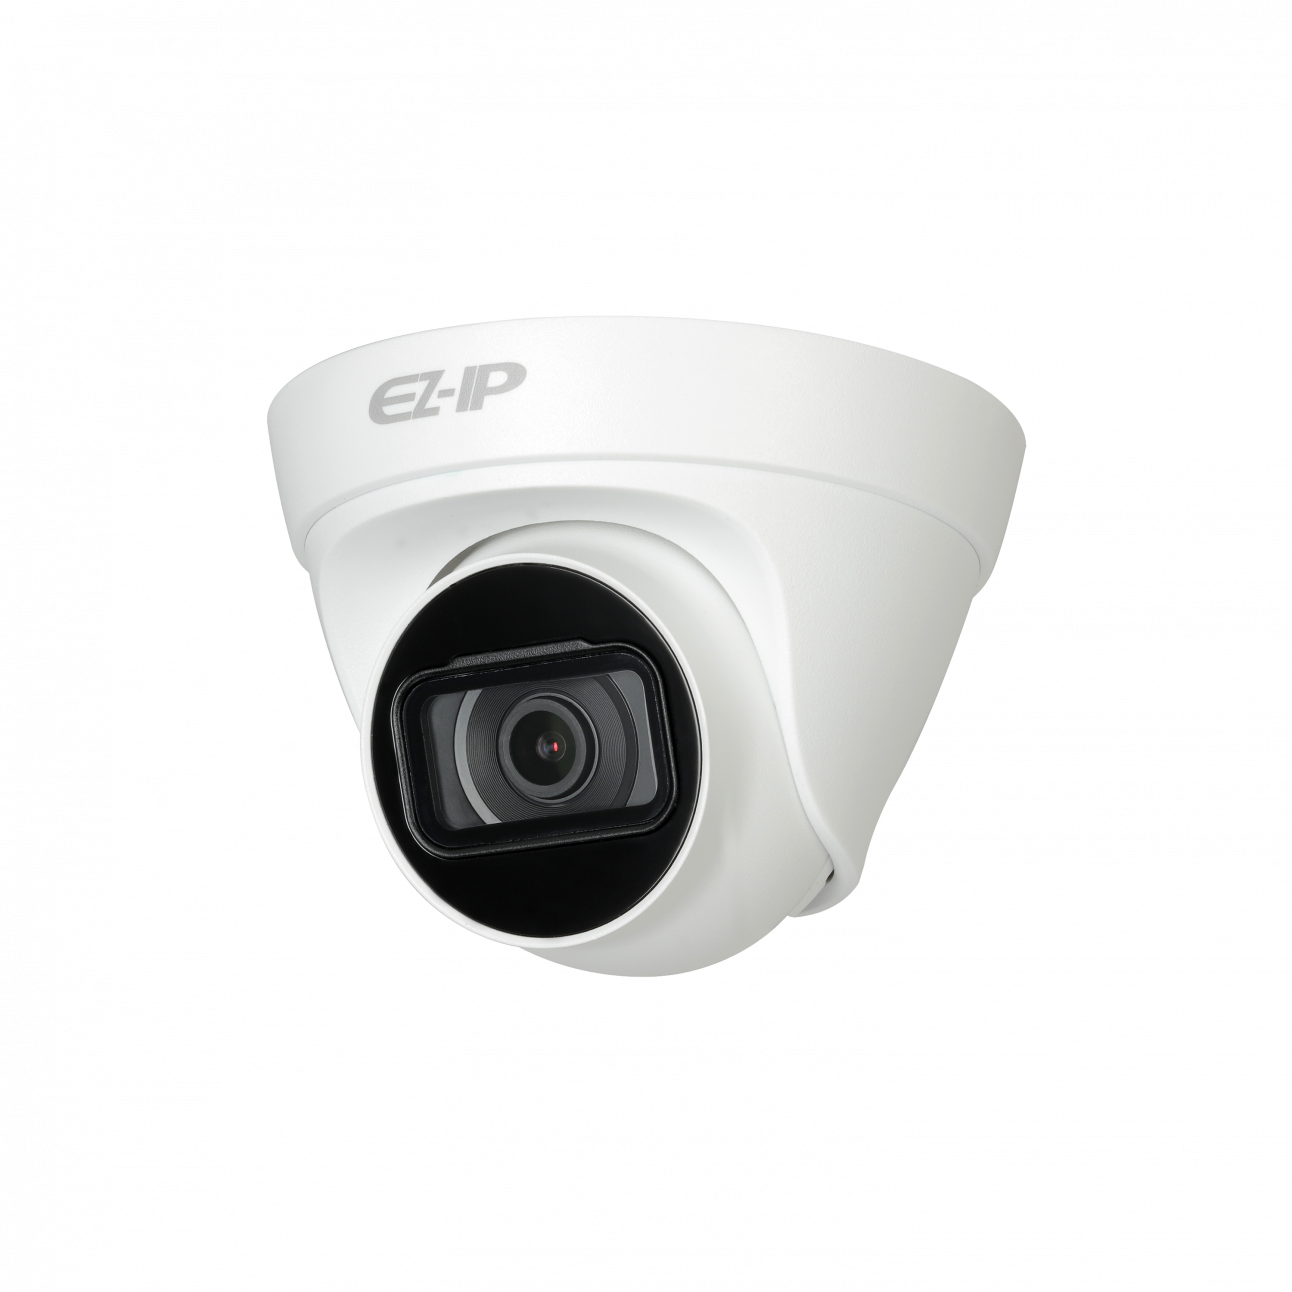 IP камера Dahua EZ-IPC-T1B20P-0280B купольная 2Мп, фикс. объектив 2.8мм, ИК до 30м, DC12В, PoE